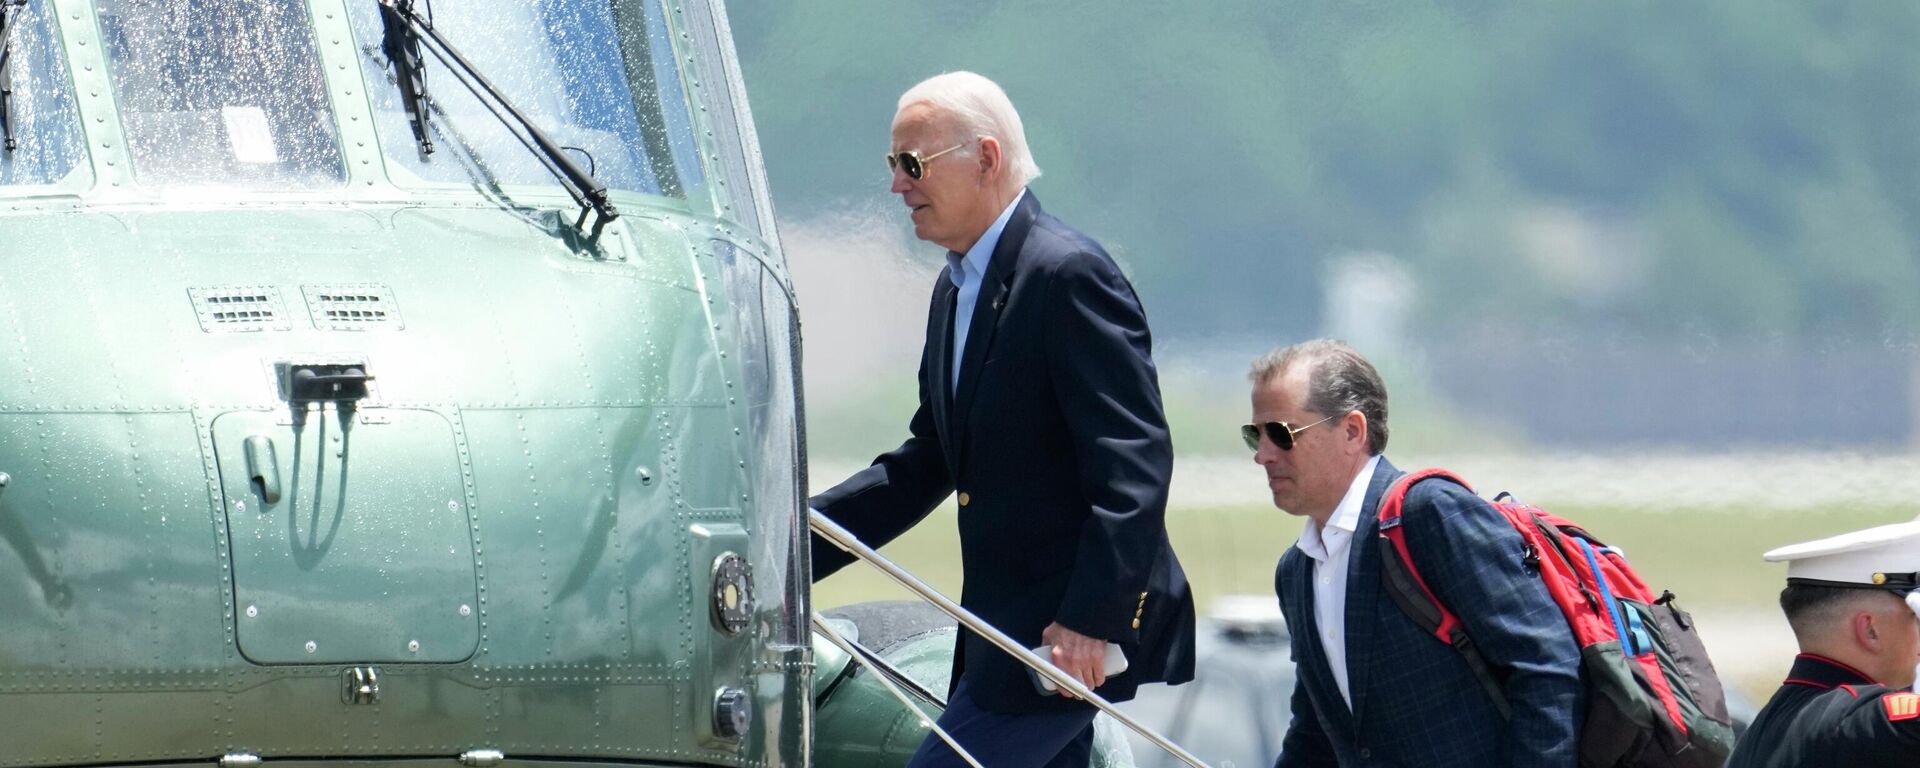 President Joe Biden boards Marine One with his son Hunter Biden as he leaves Andrews Air Force Base, Md., on his way to Camp David, Saturday, June 24, 2023 - Sputnik International, 1920, 07.09.2023